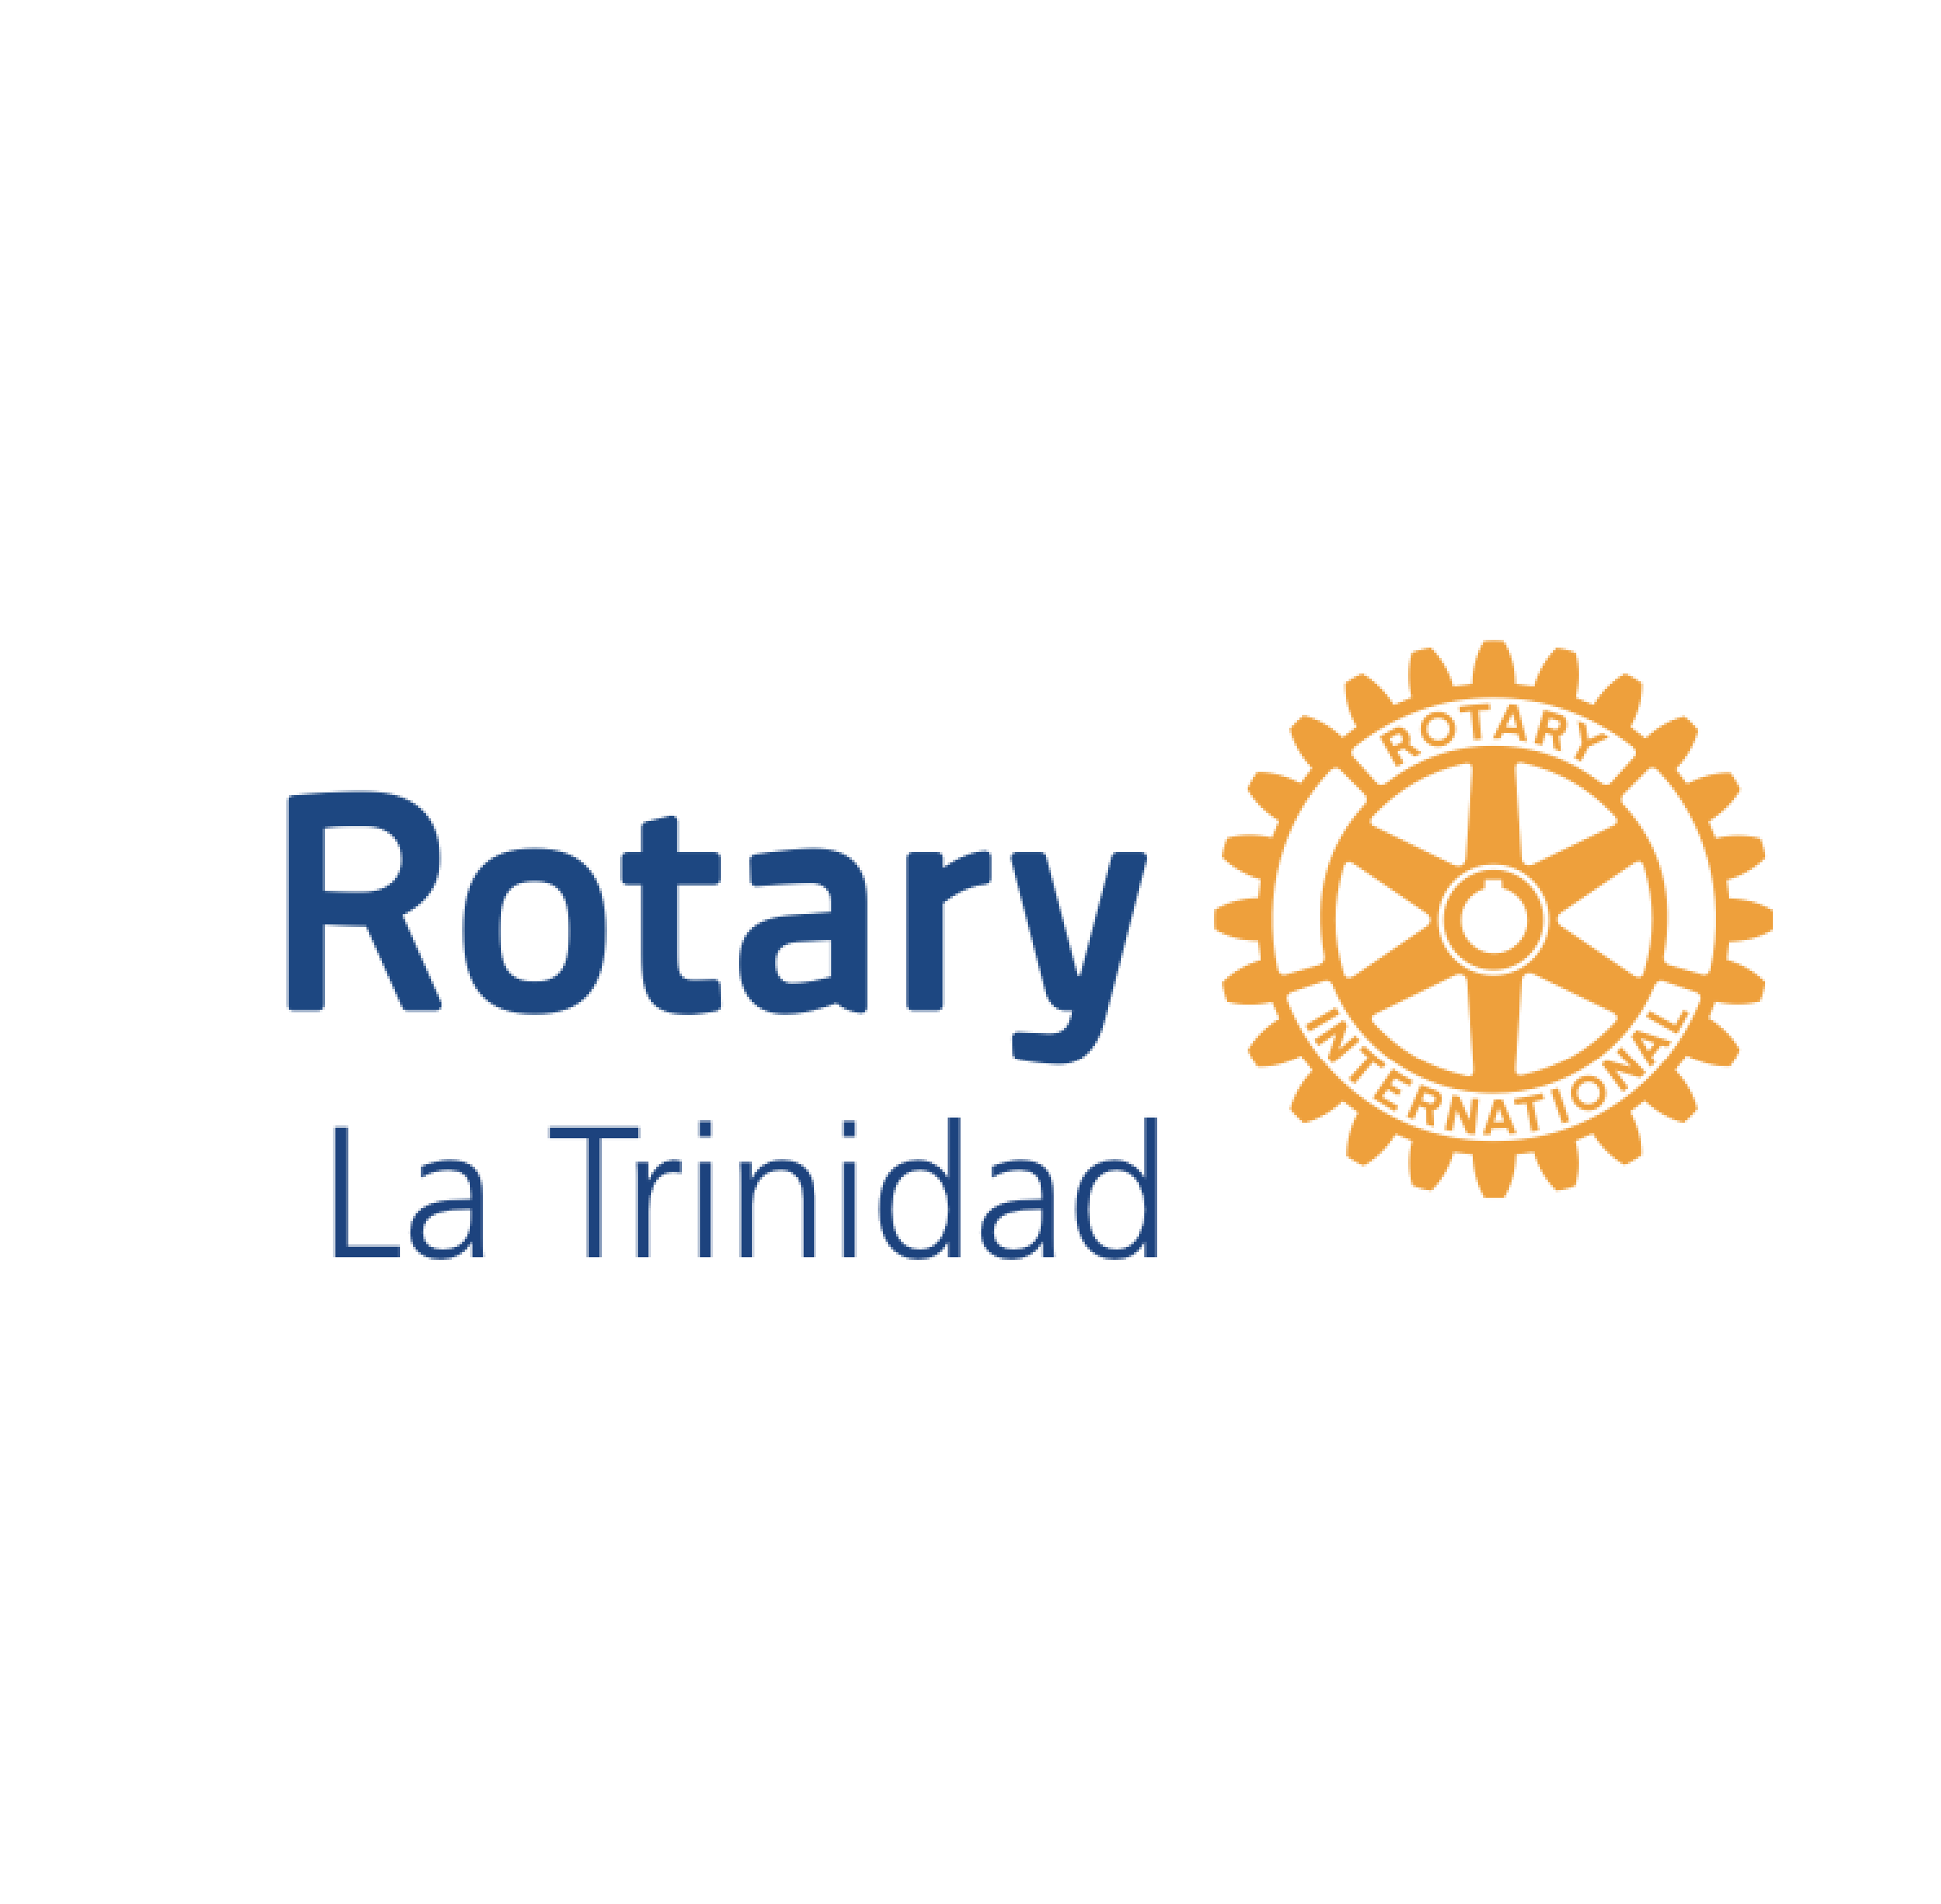 Rotary La Trinidad